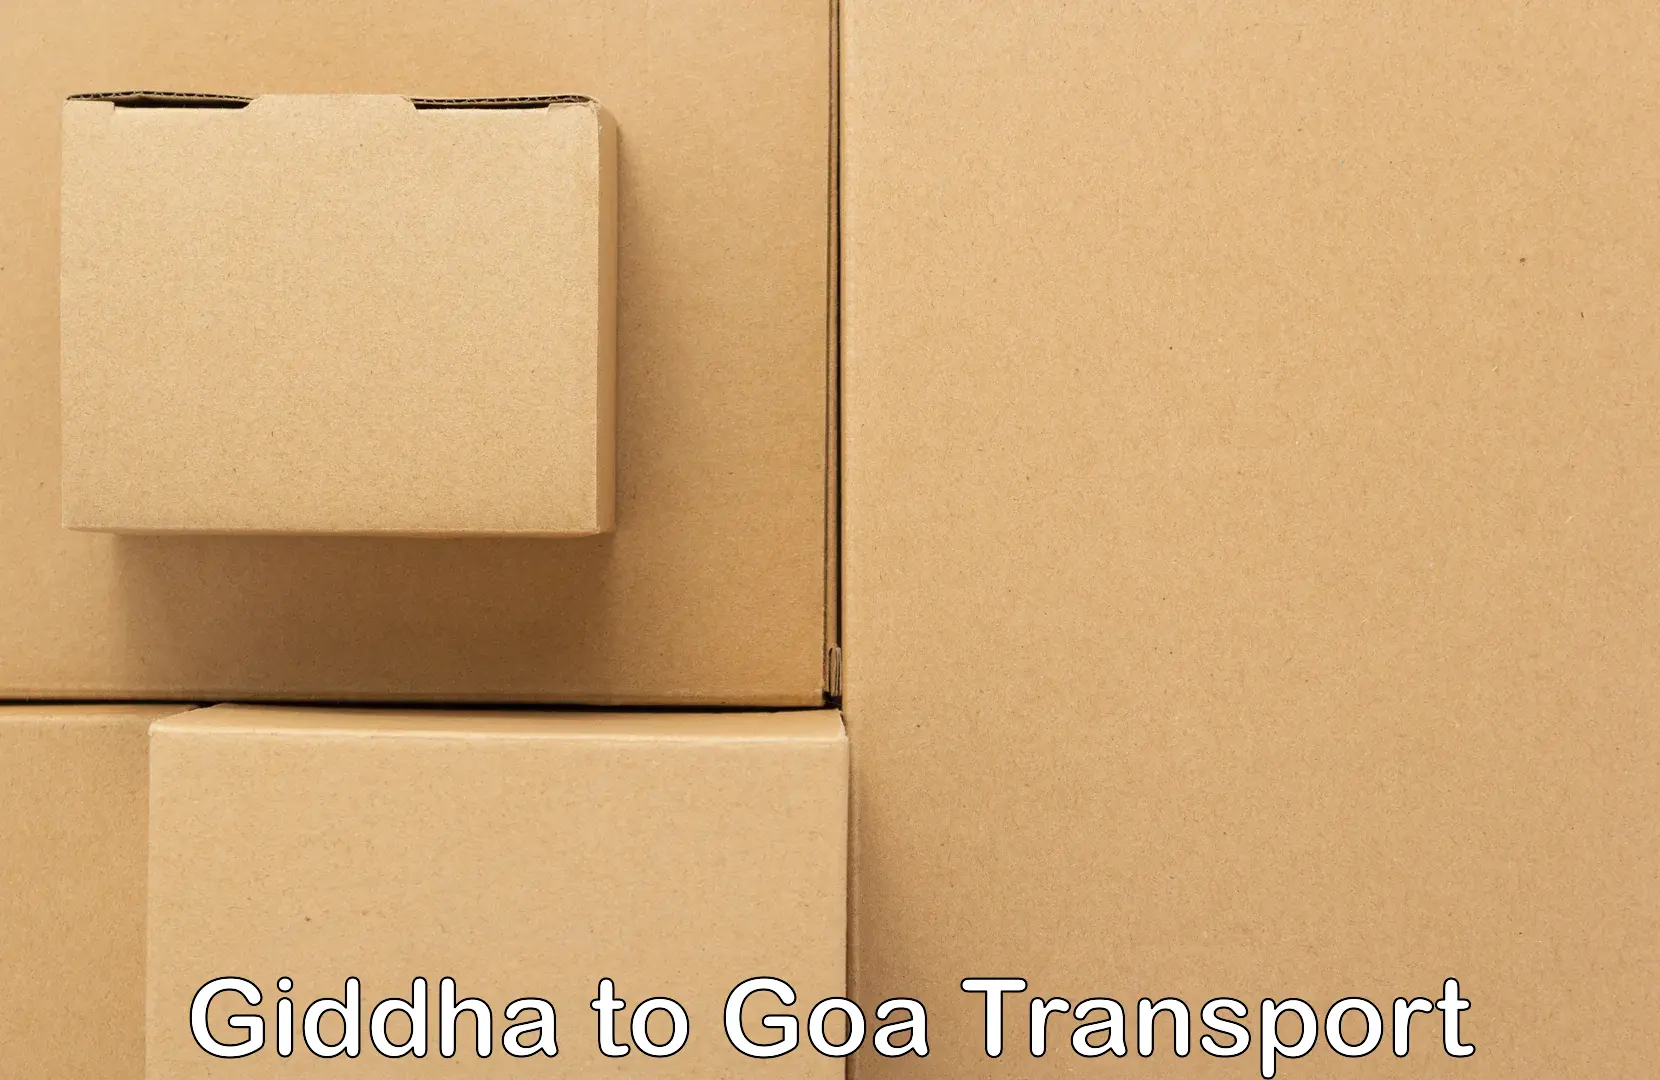 Shipping partner Giddha to Vasco da Gama